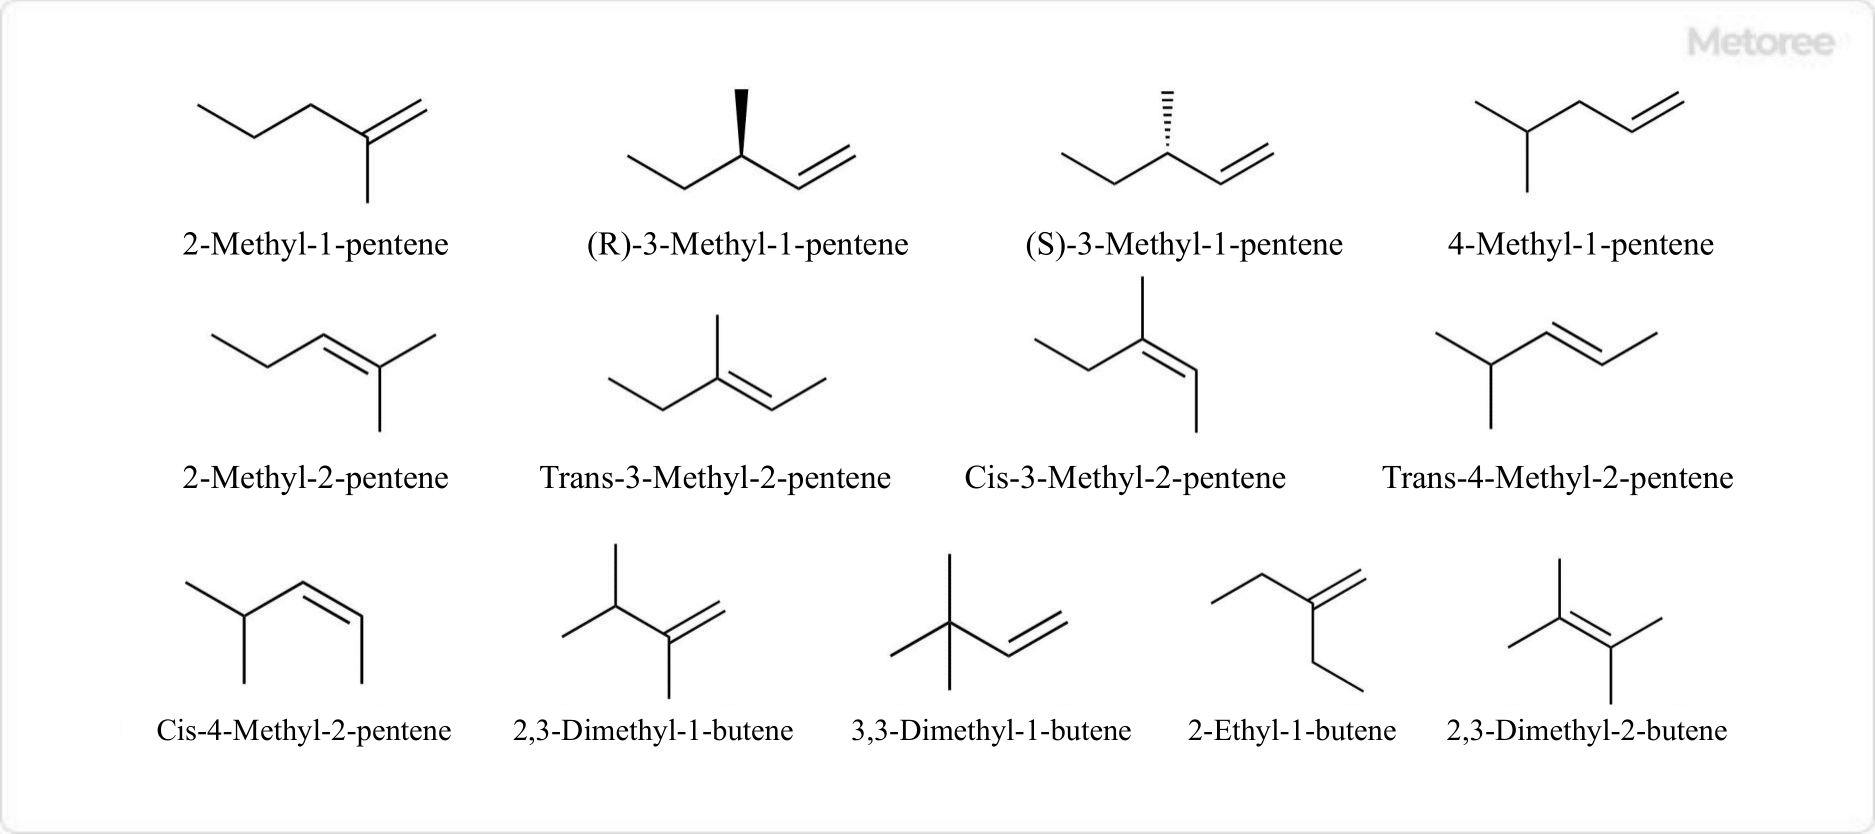 Figure 3. Structural isomers of branched alkenes of hexene